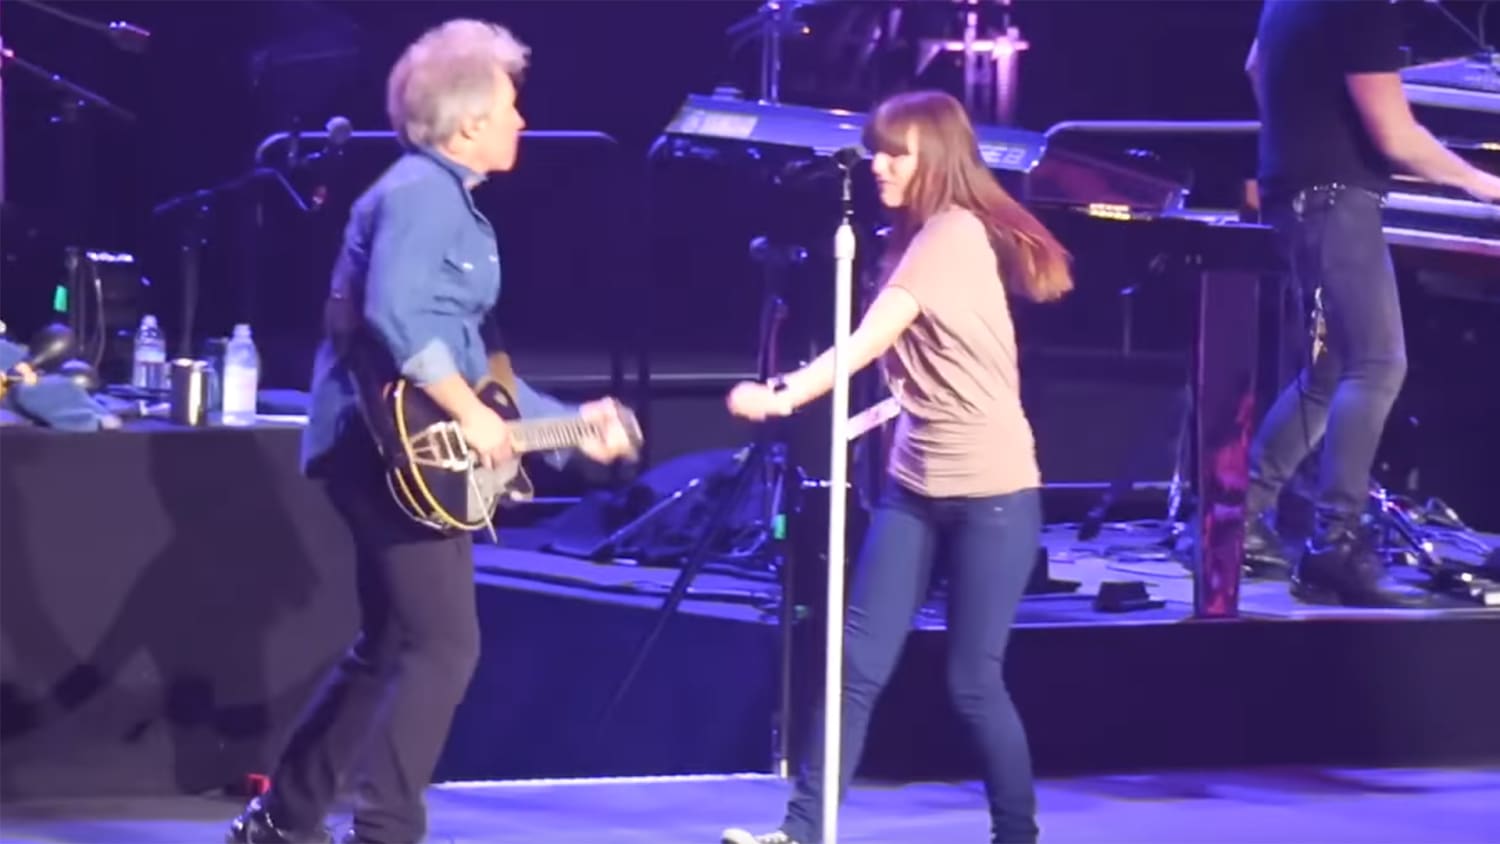 Jon Bon Jovi's daughter surprises concert audience with on stage dance